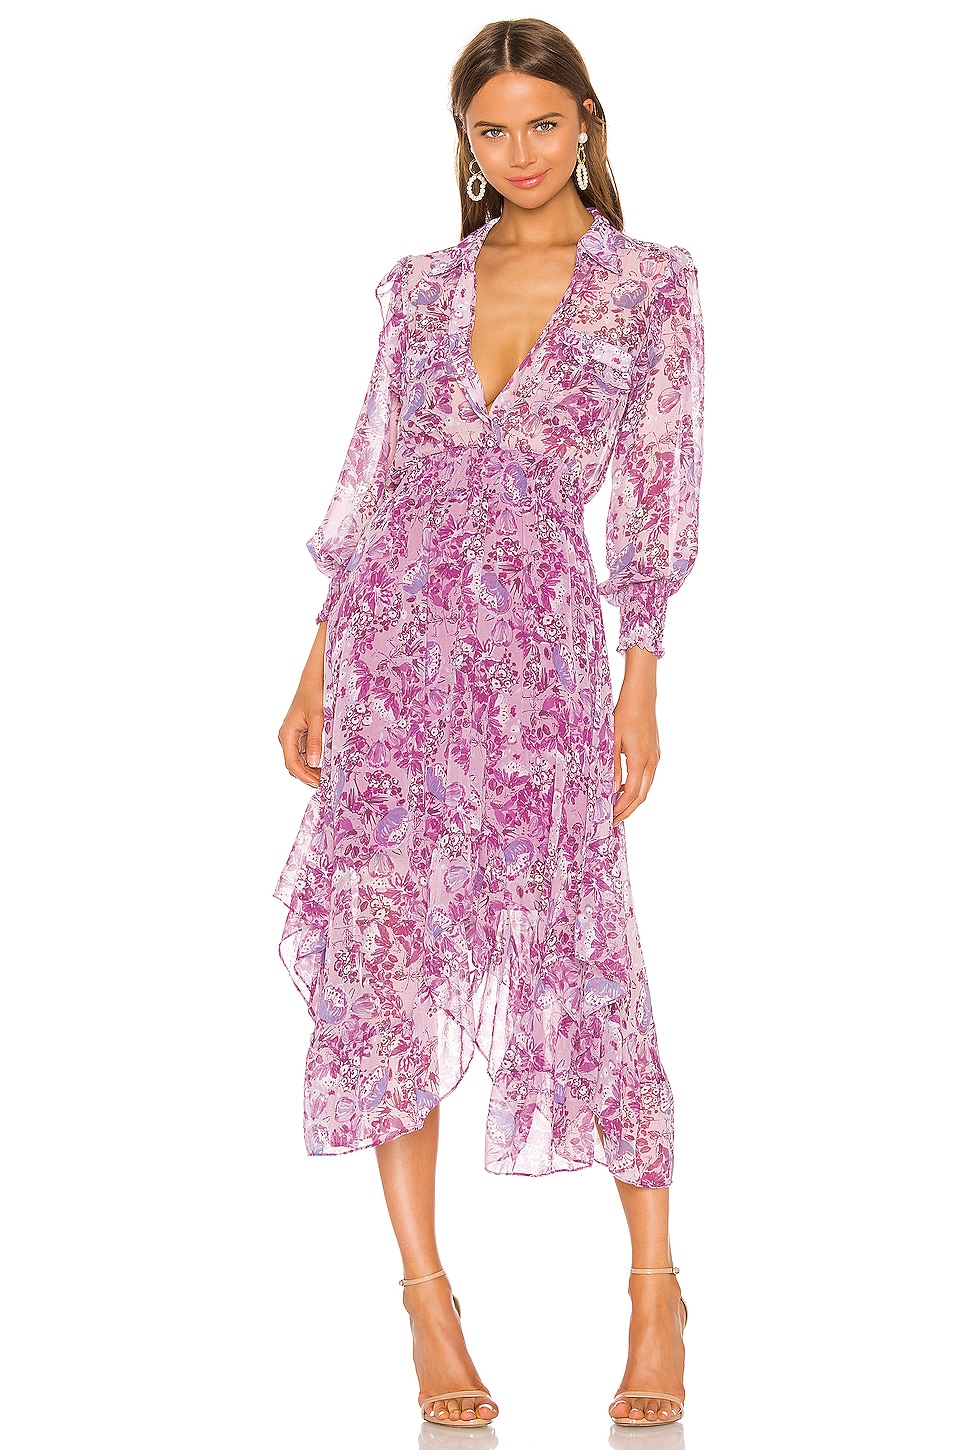 MISA Los Angeles Kaiya Dress in Lilac Floral | REVOLVE